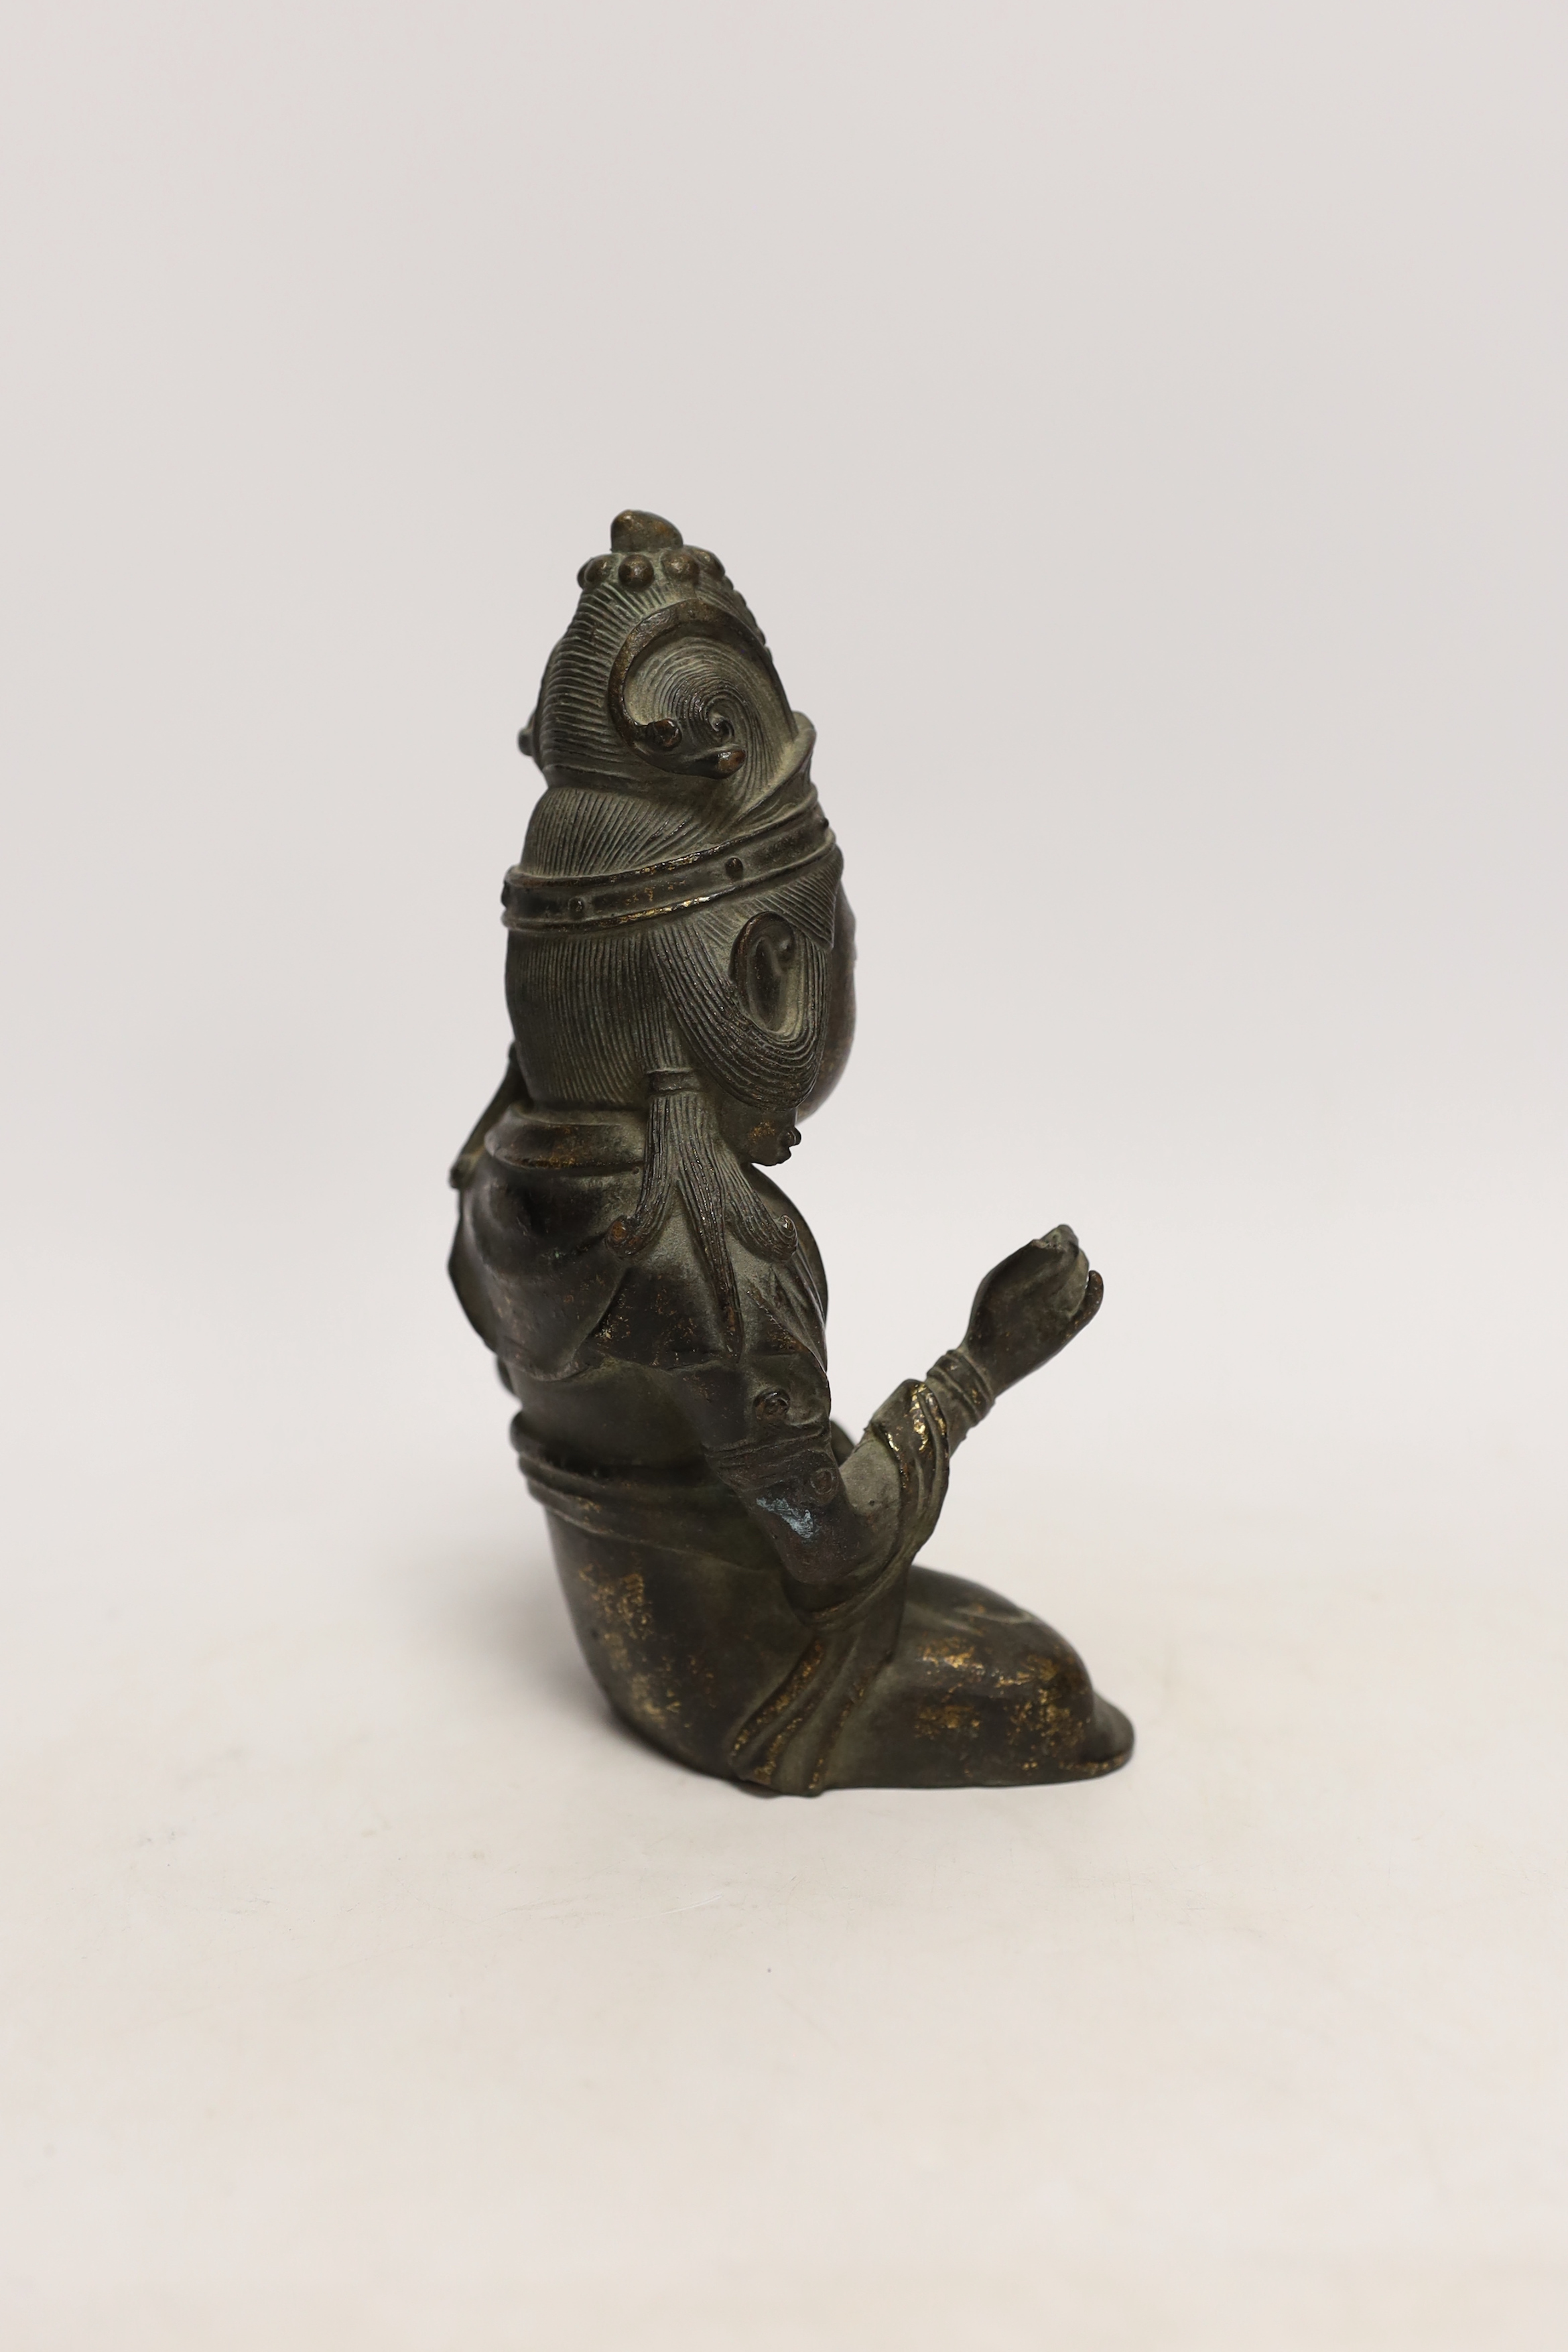 A Chinese bronze figure of Bodhisattva, 20cm high